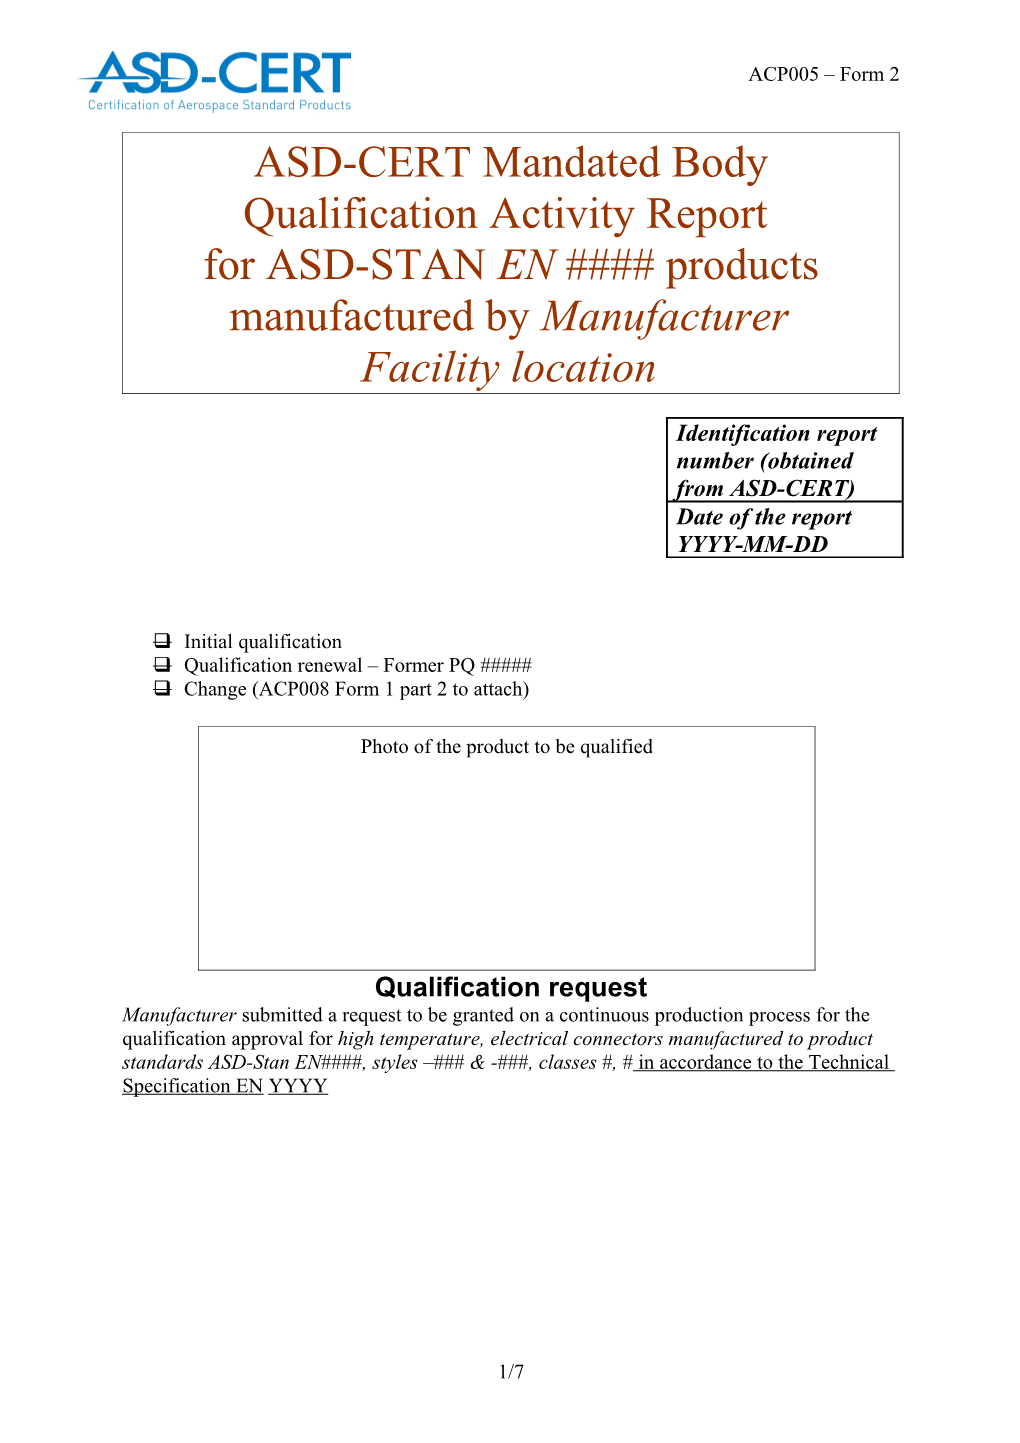 ASD-CERT Mandated Body Report for ASD-STAN Qualific